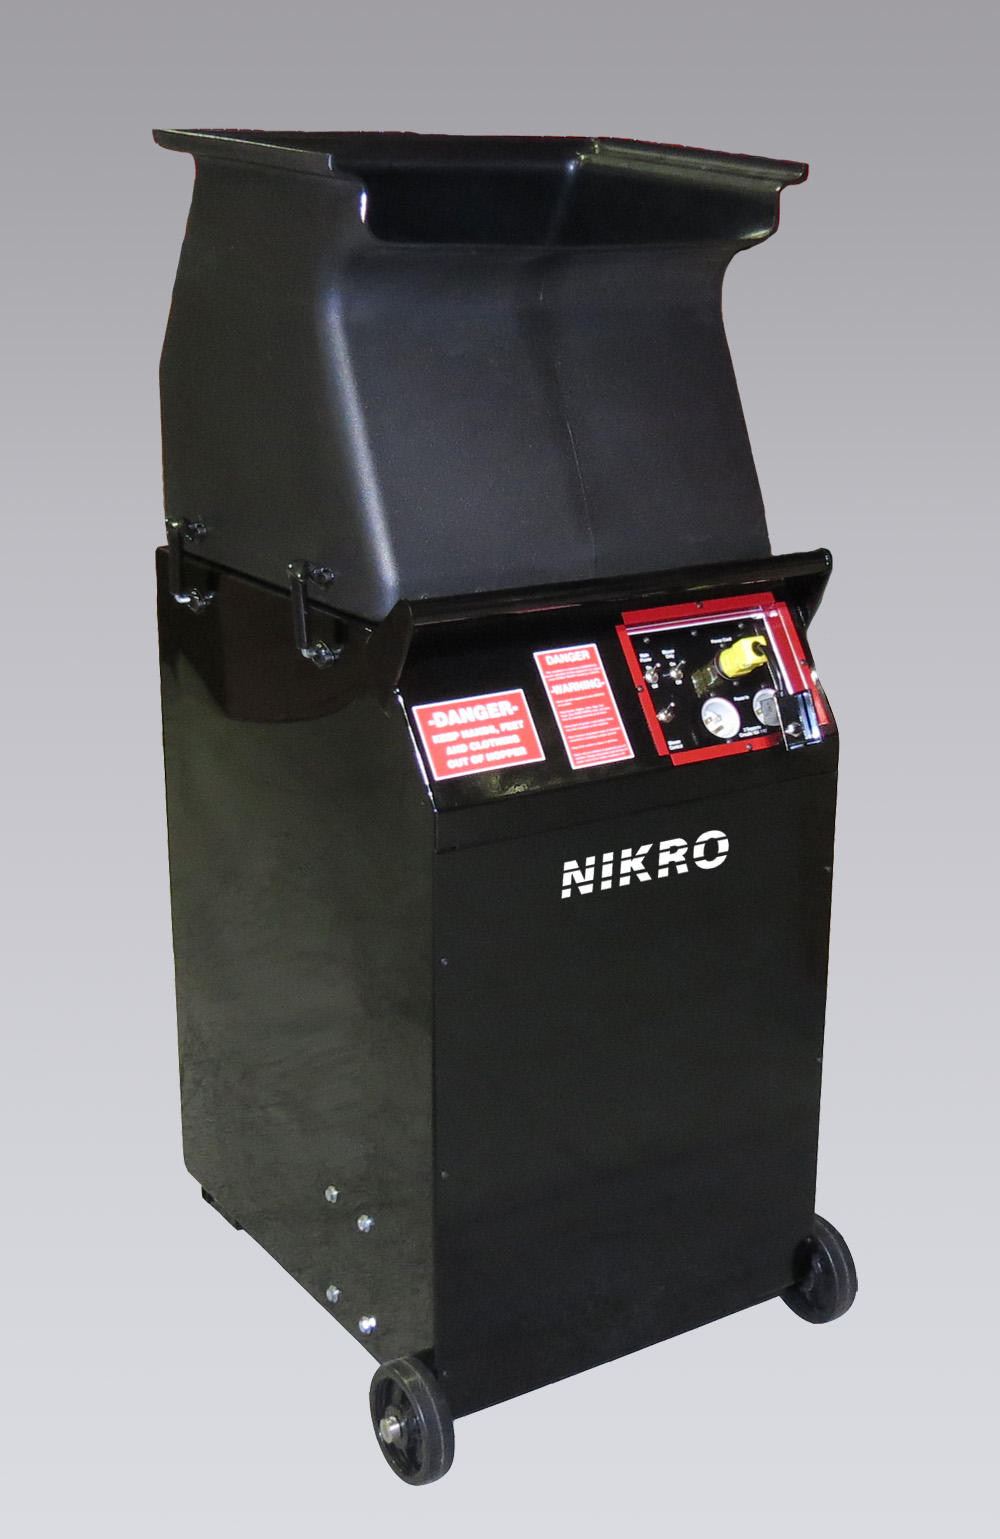 IB2013 - Insulation Blowing Machine - NIKRO Industries, Inc.